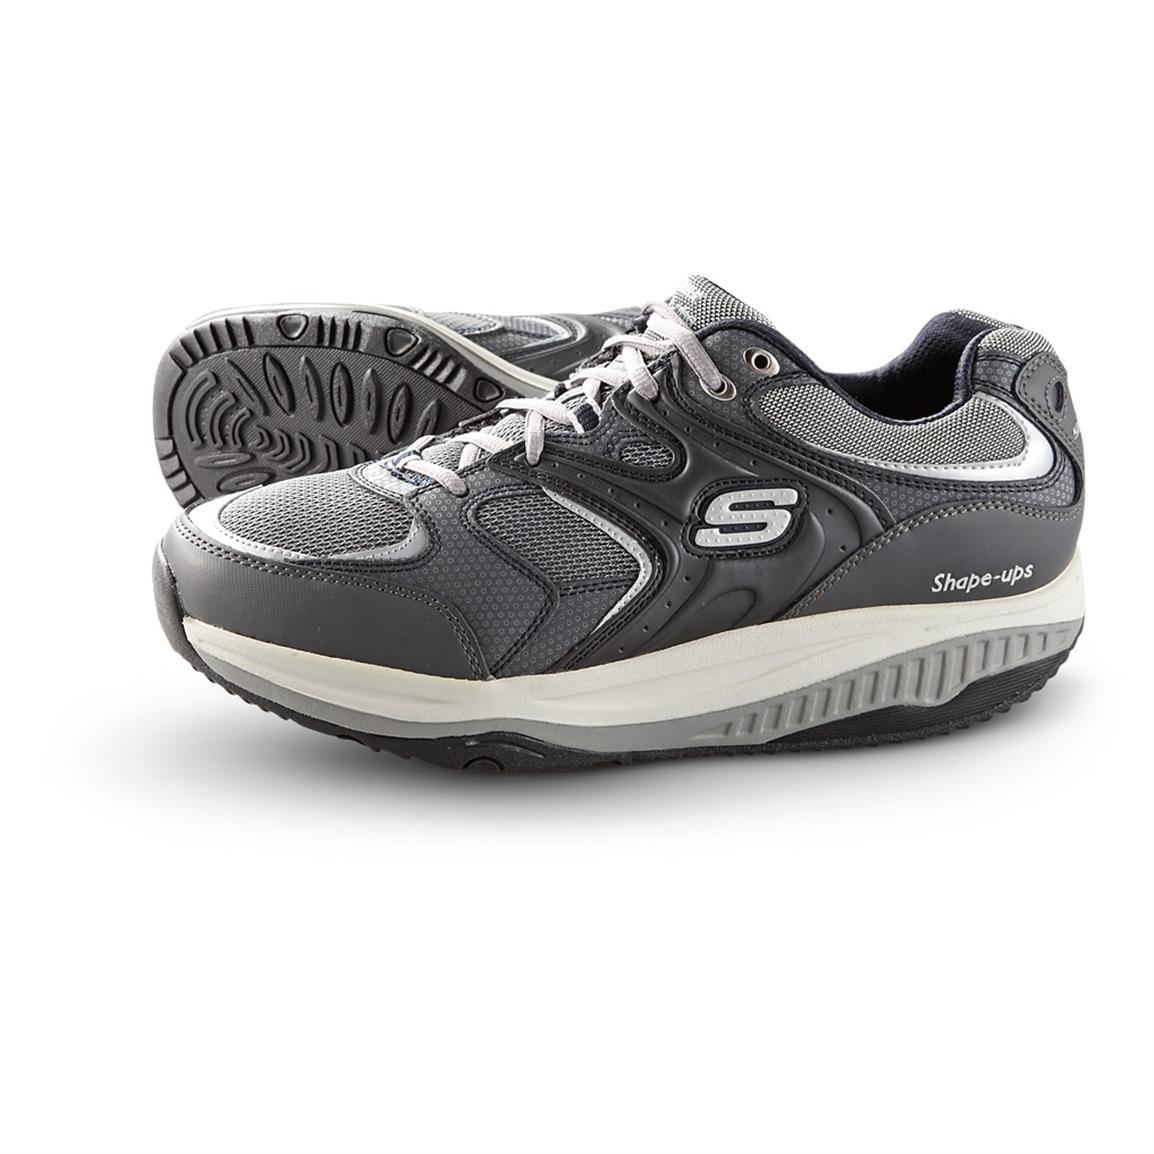 Men's Skechers® Shape - ups® Talas Walking Shoes, Navy / Silver - 227878, Shoes & Sneakers at Sportsman's